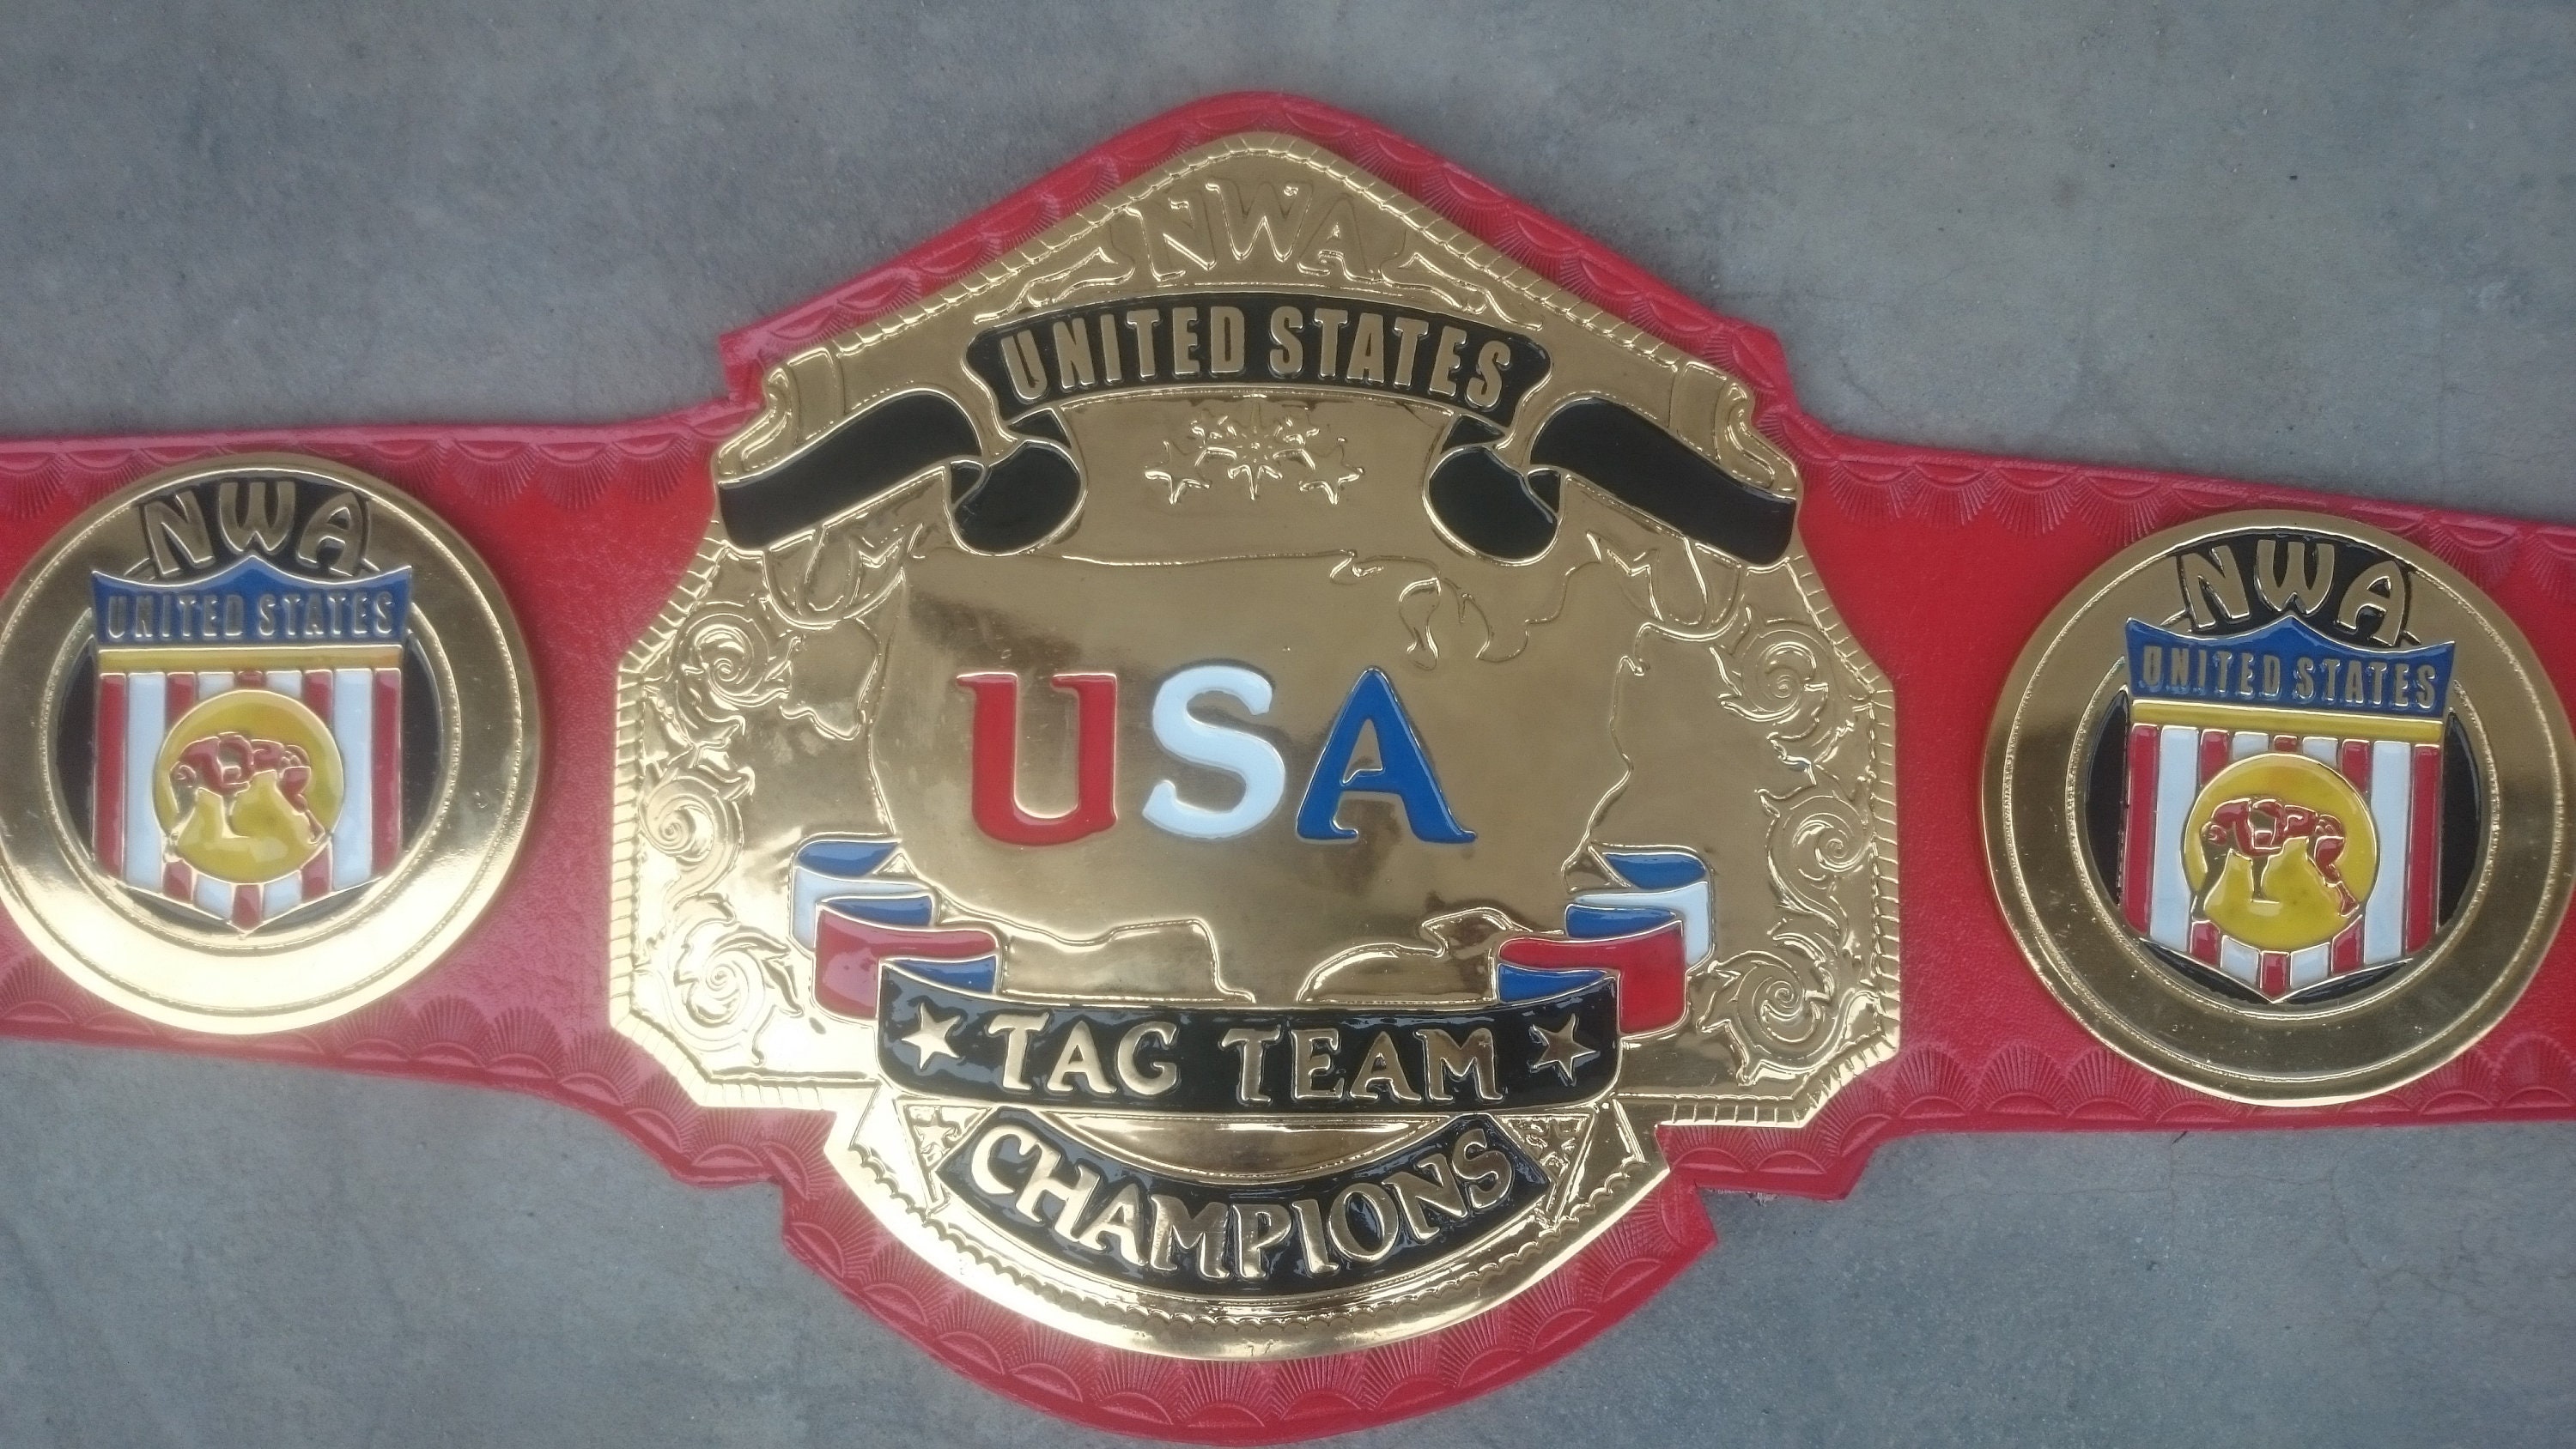 Nwa United States tag team champion's belt replica | Etsy